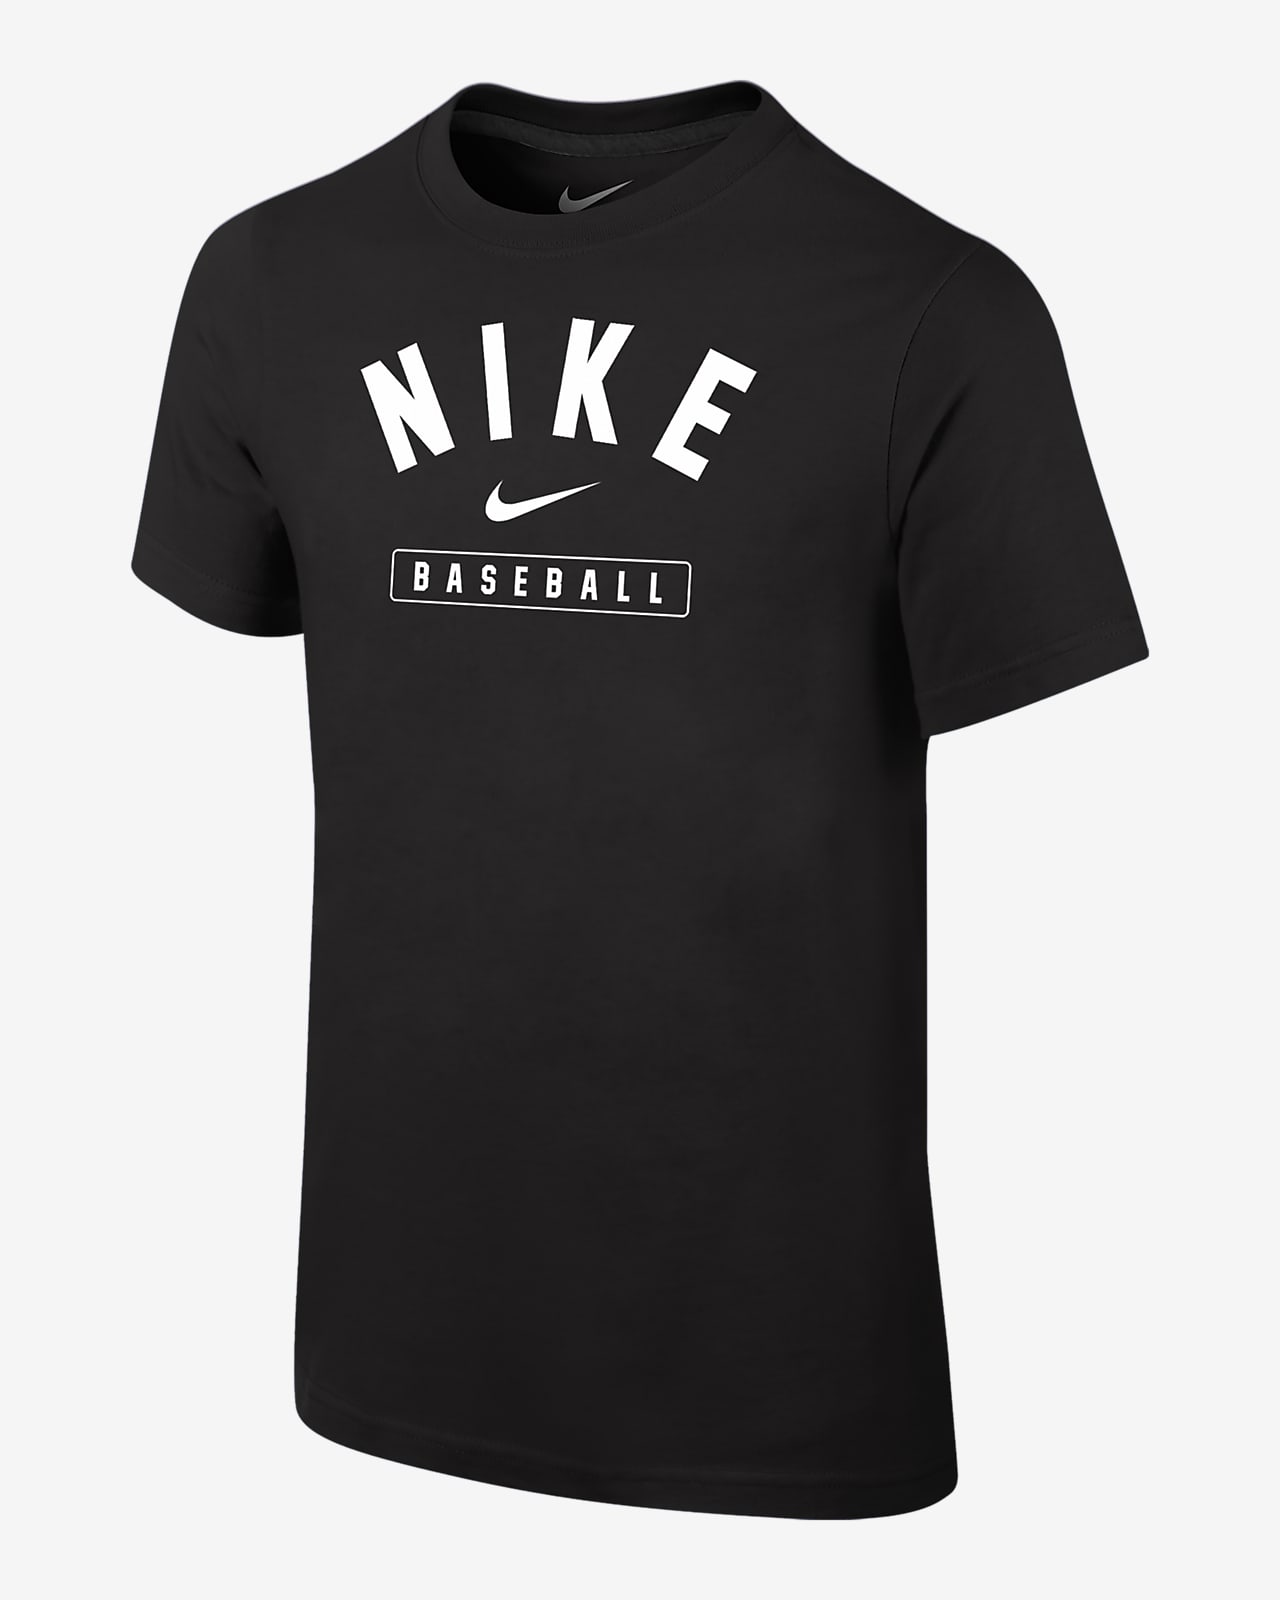 Nike Baseball Big Kids' (Boys') T-Shirt